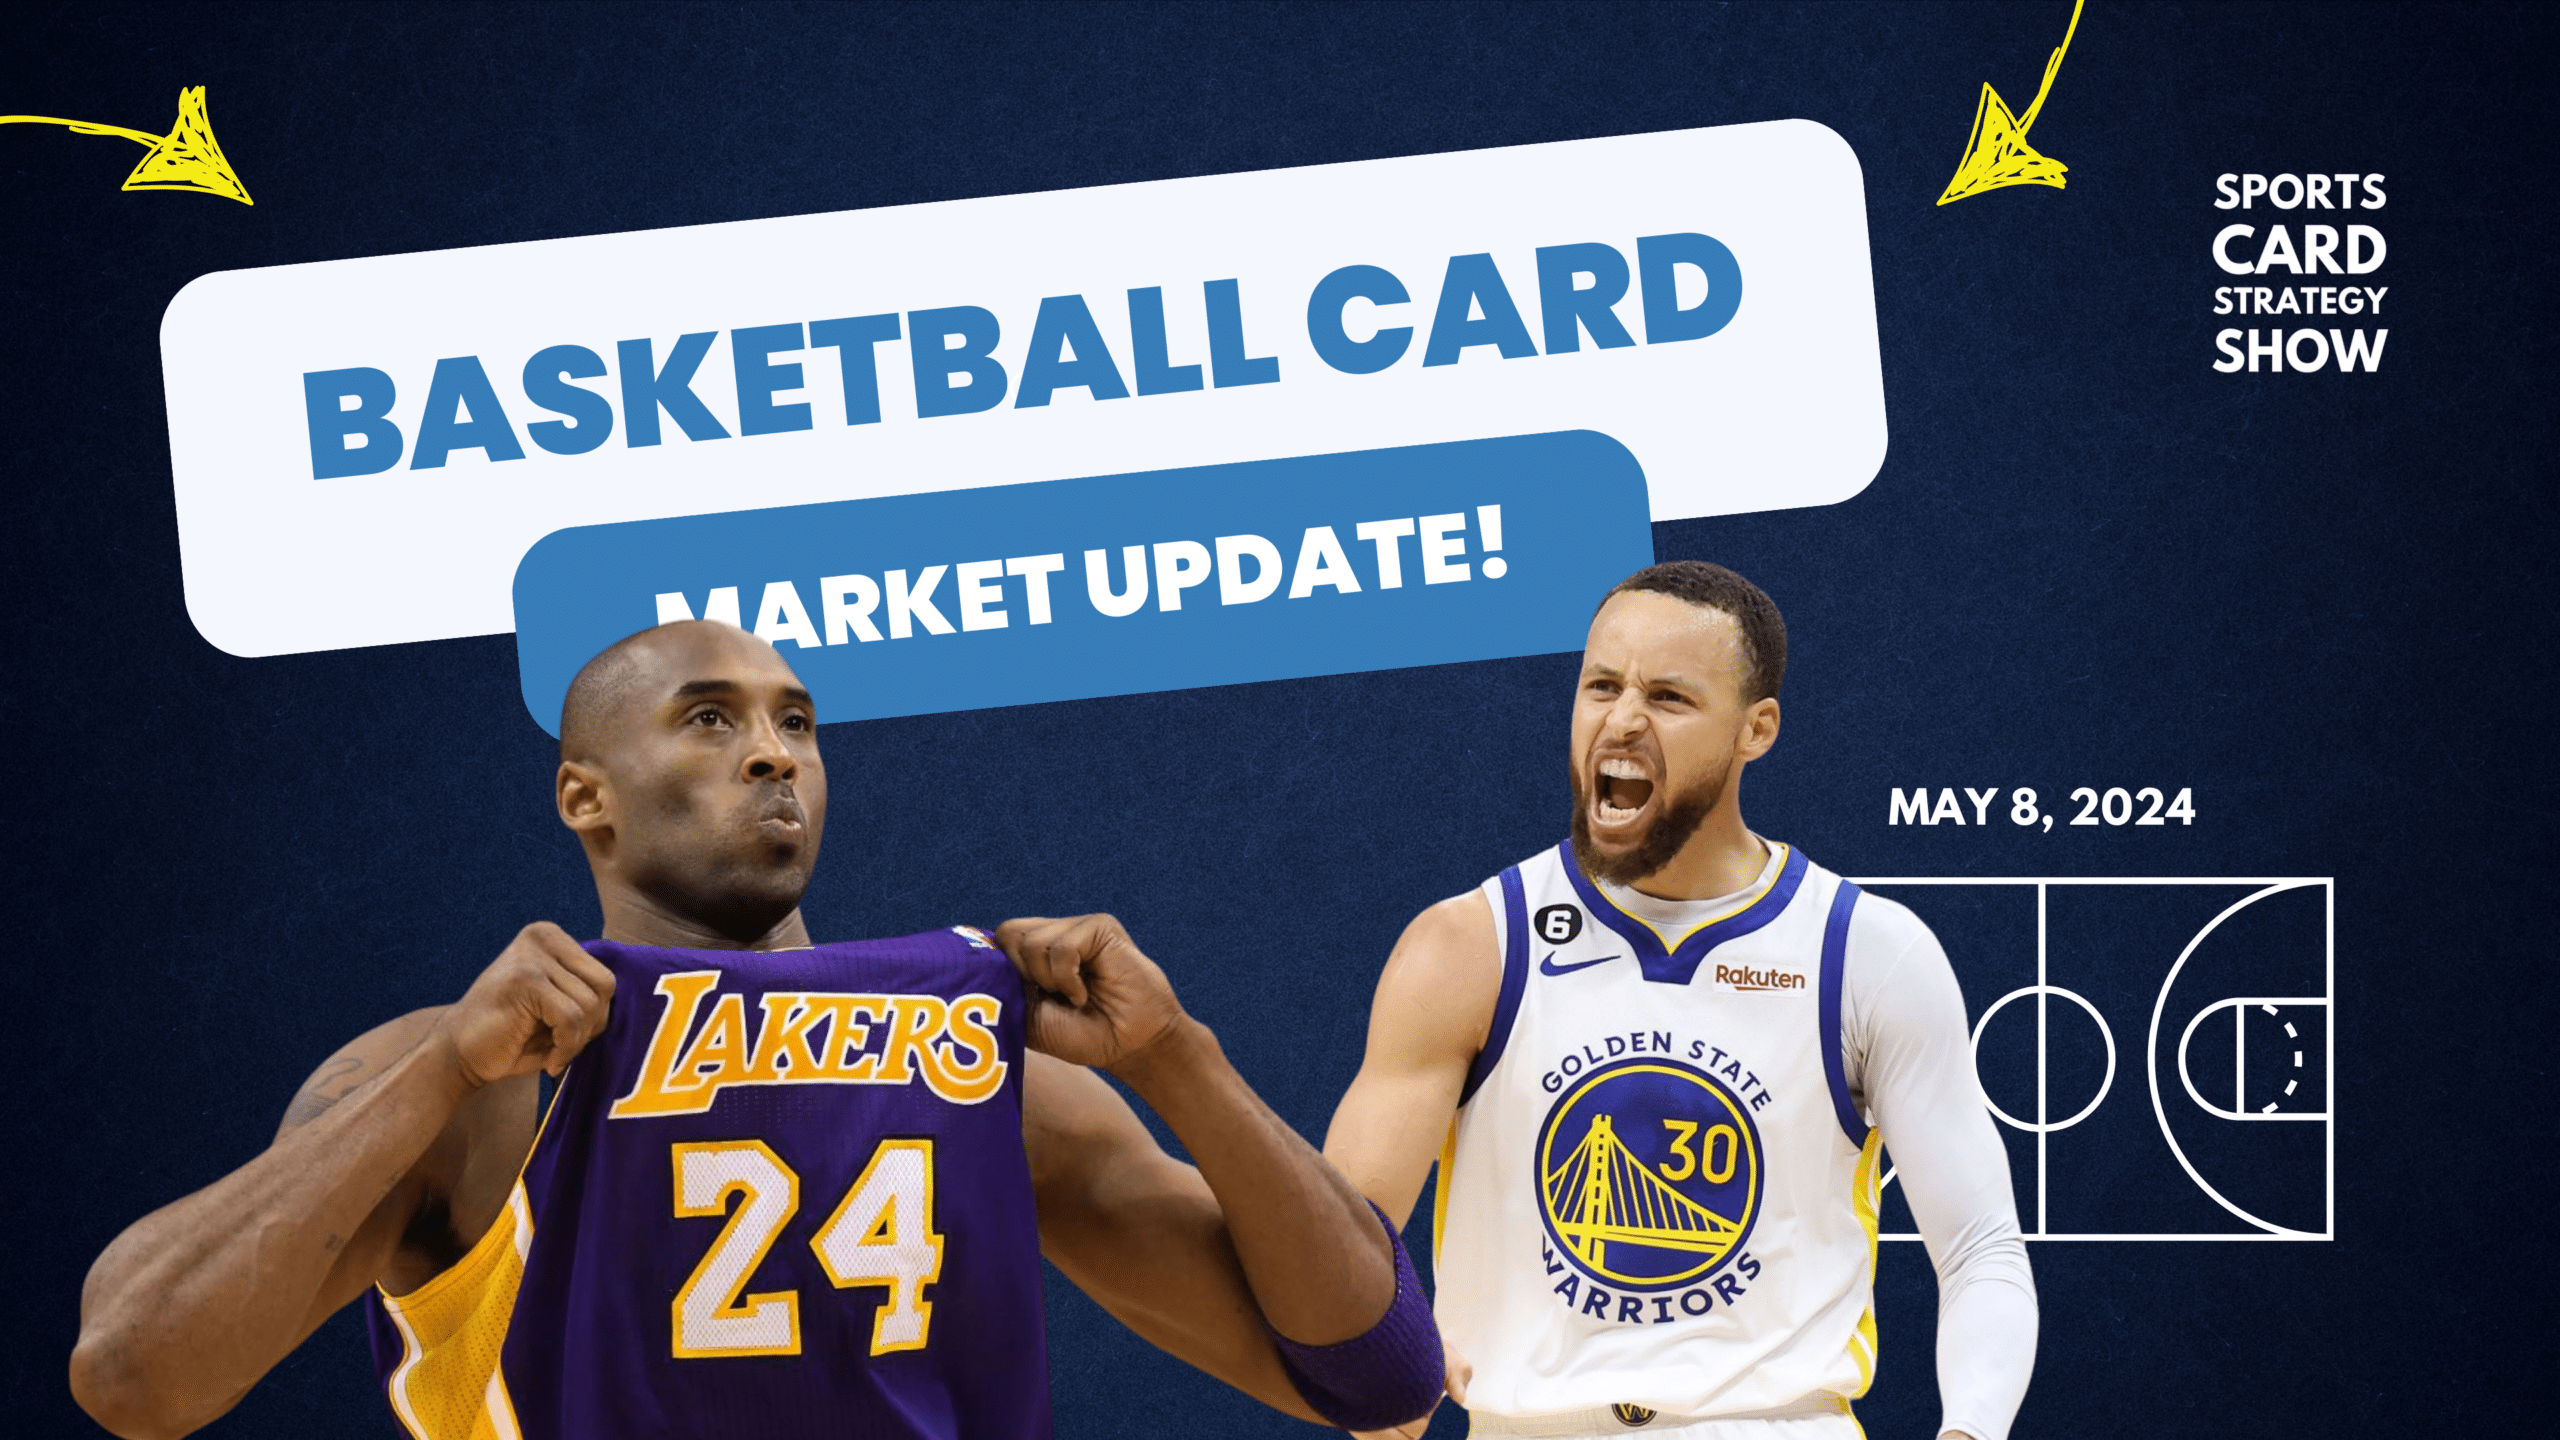 Basketball Card Market Update Wednesday, May 8, 2024